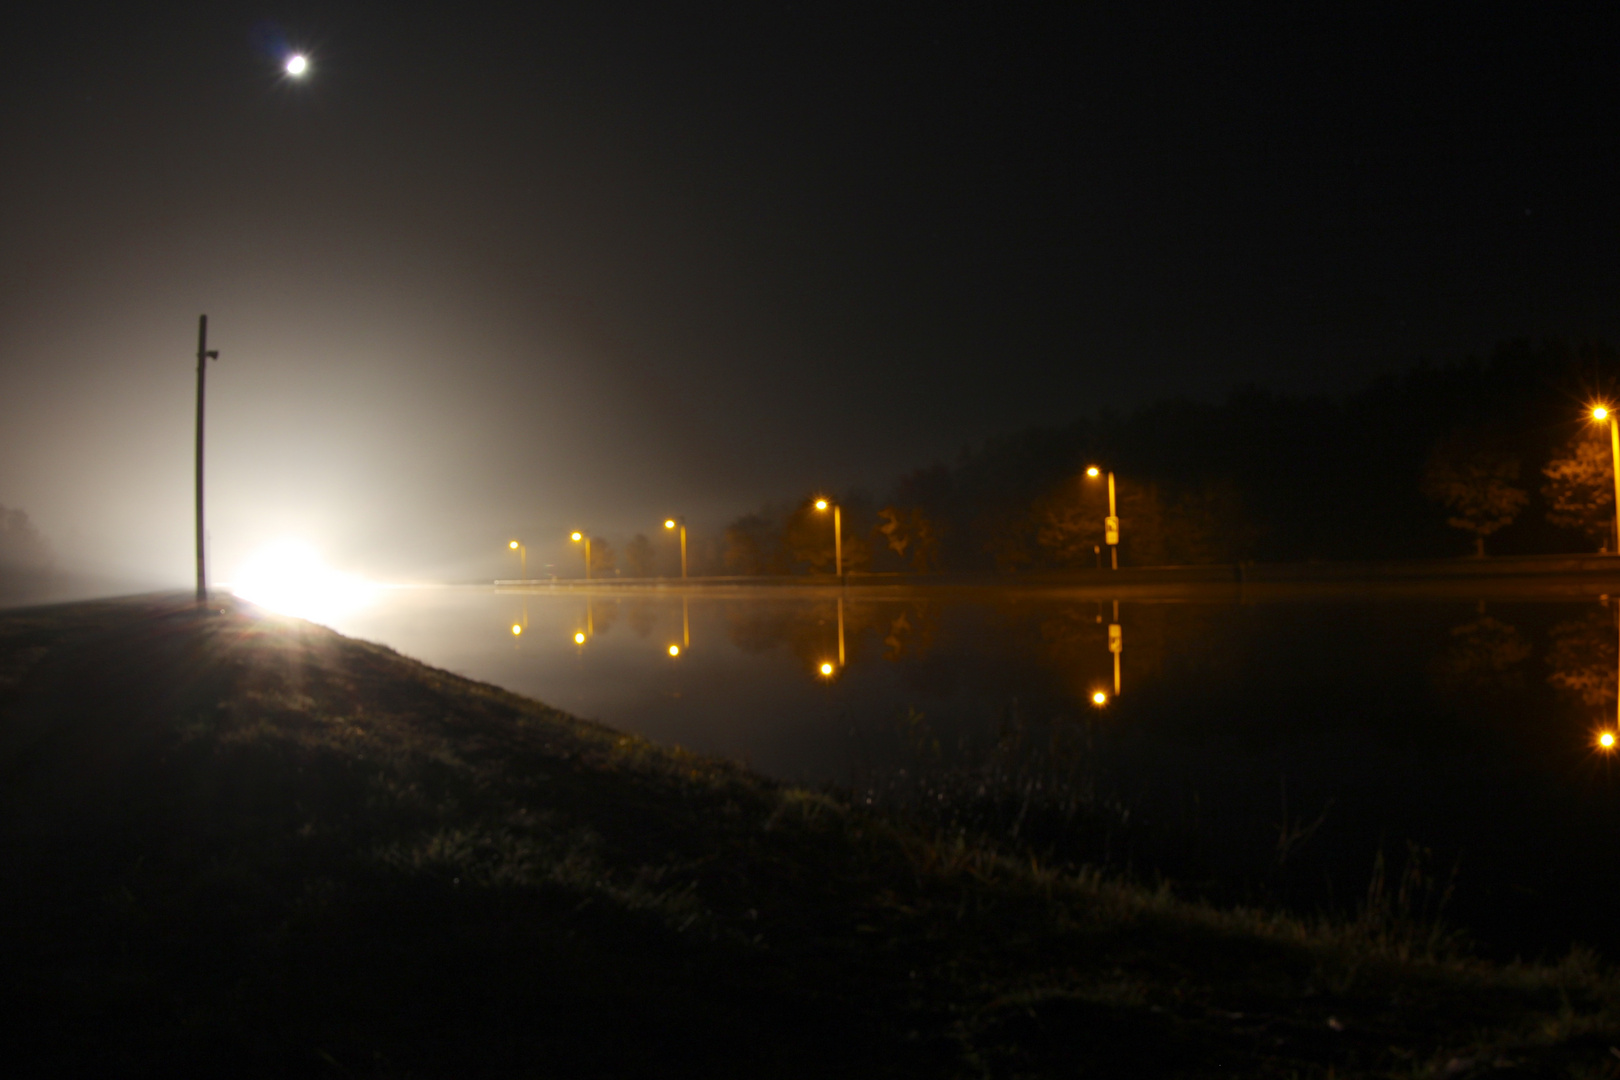 Main-Donau-Kanal bei Nacht.